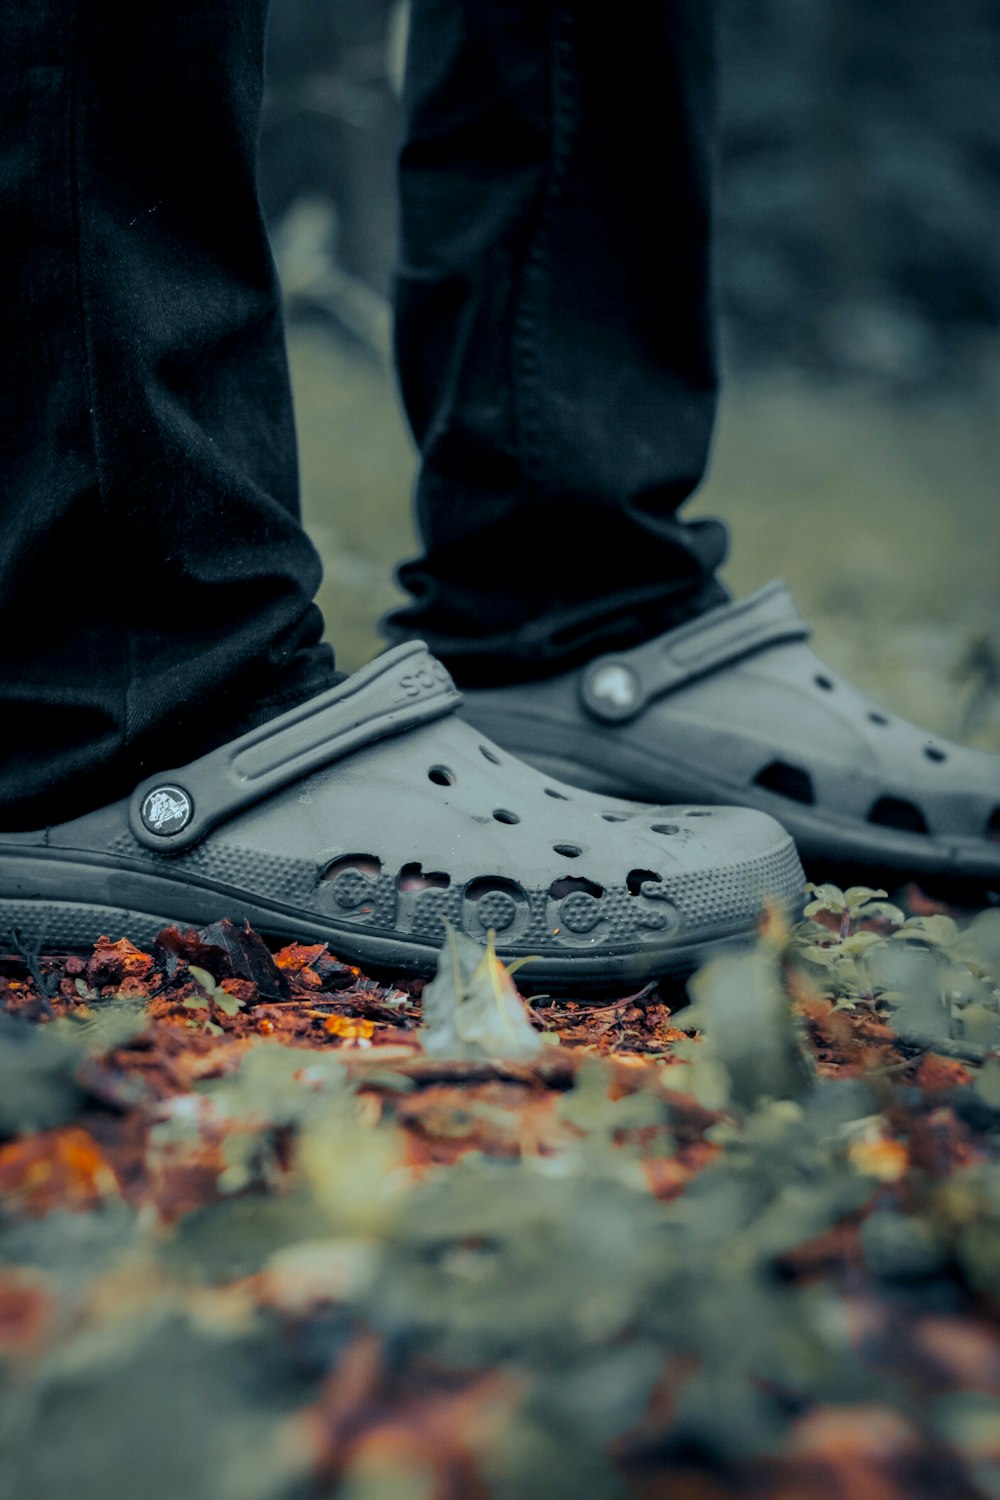 Crocs Pictures | Download Free Images on Unsplash